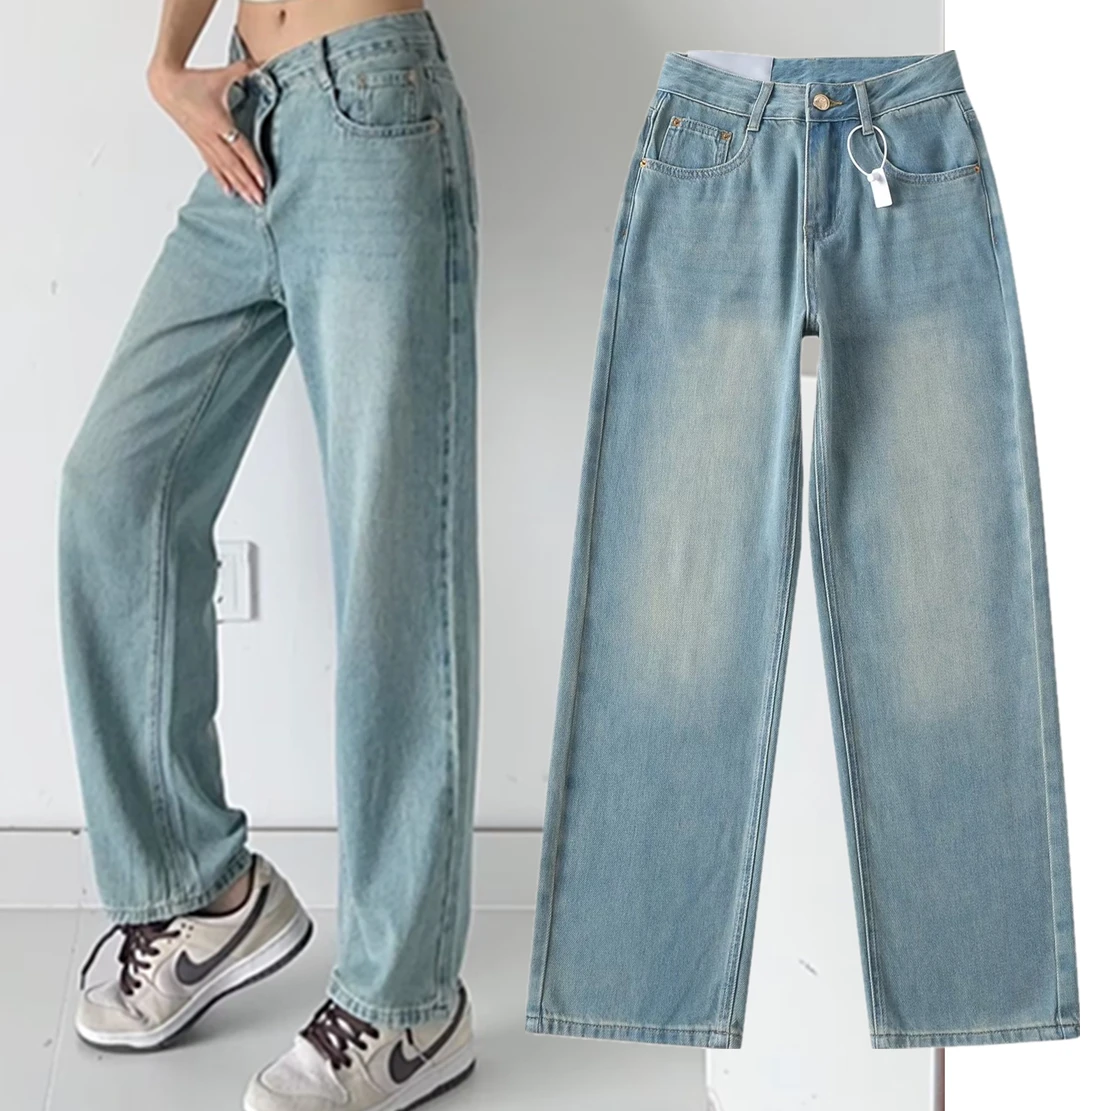 Maxdutti New Fashion Denim Pants American Jeans Women Retro Mom Jeans High Waist Distressed Loose Harem